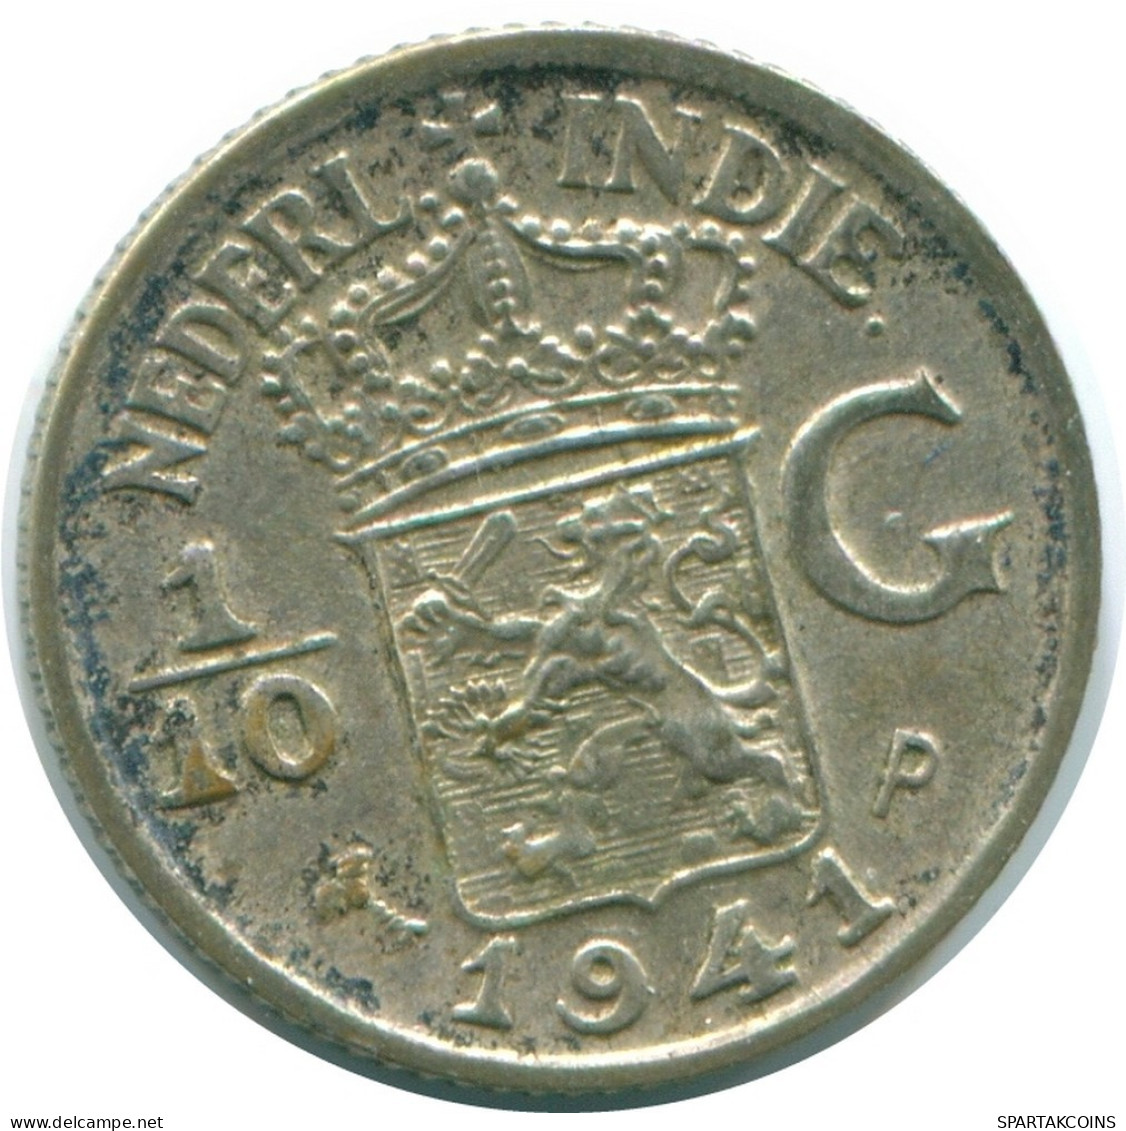 1/10 GULDEN 1941 P NIEDERLANDE OSTINDIEN SILBER Koloniale Münze #NL13708.3.D.A - Dutch East Indies